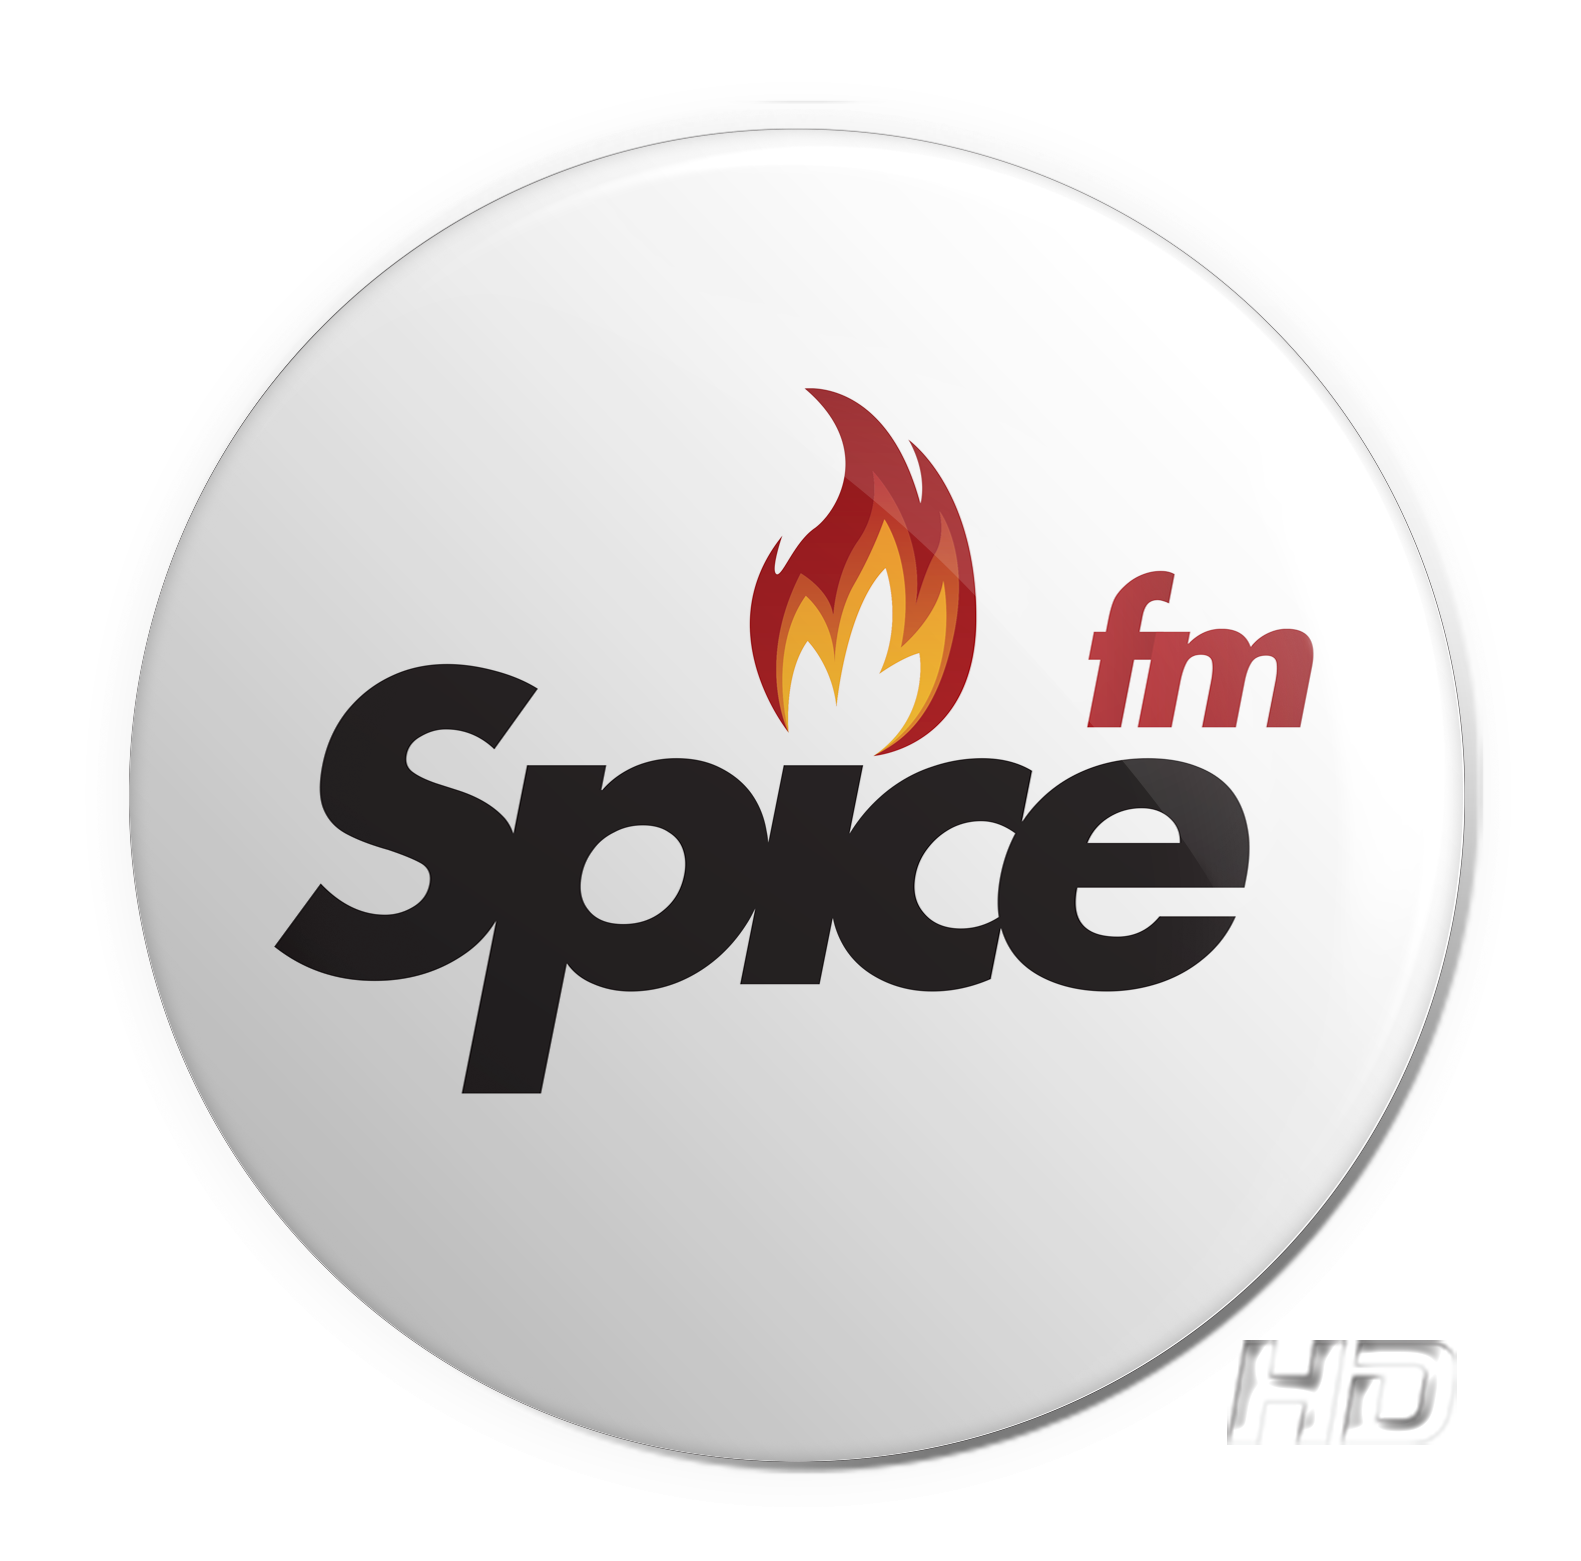 Spice FM Live